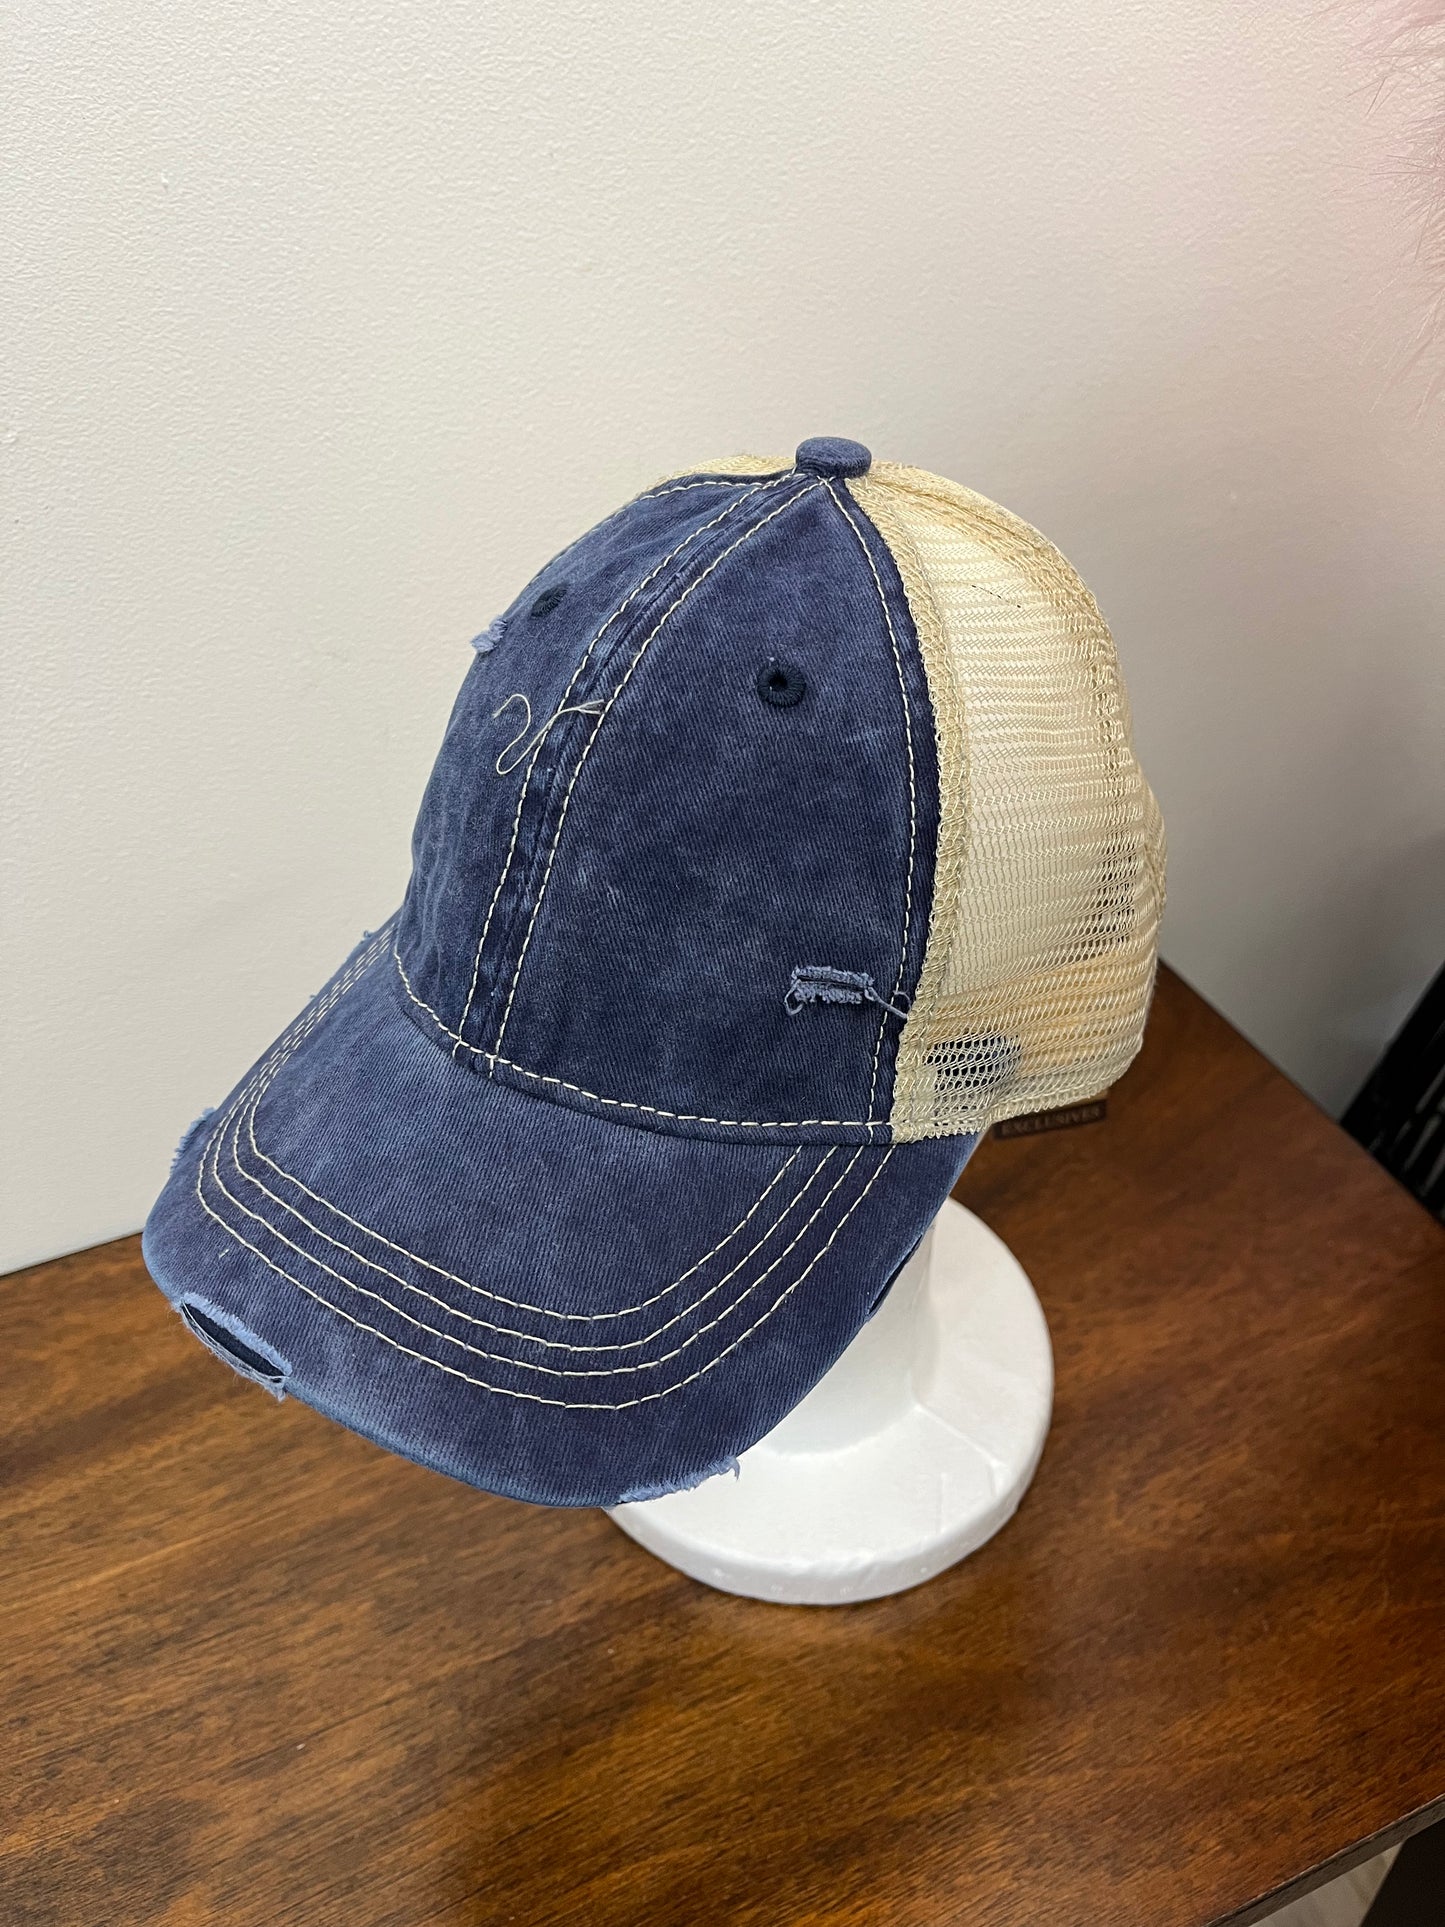 Distressed ball cap